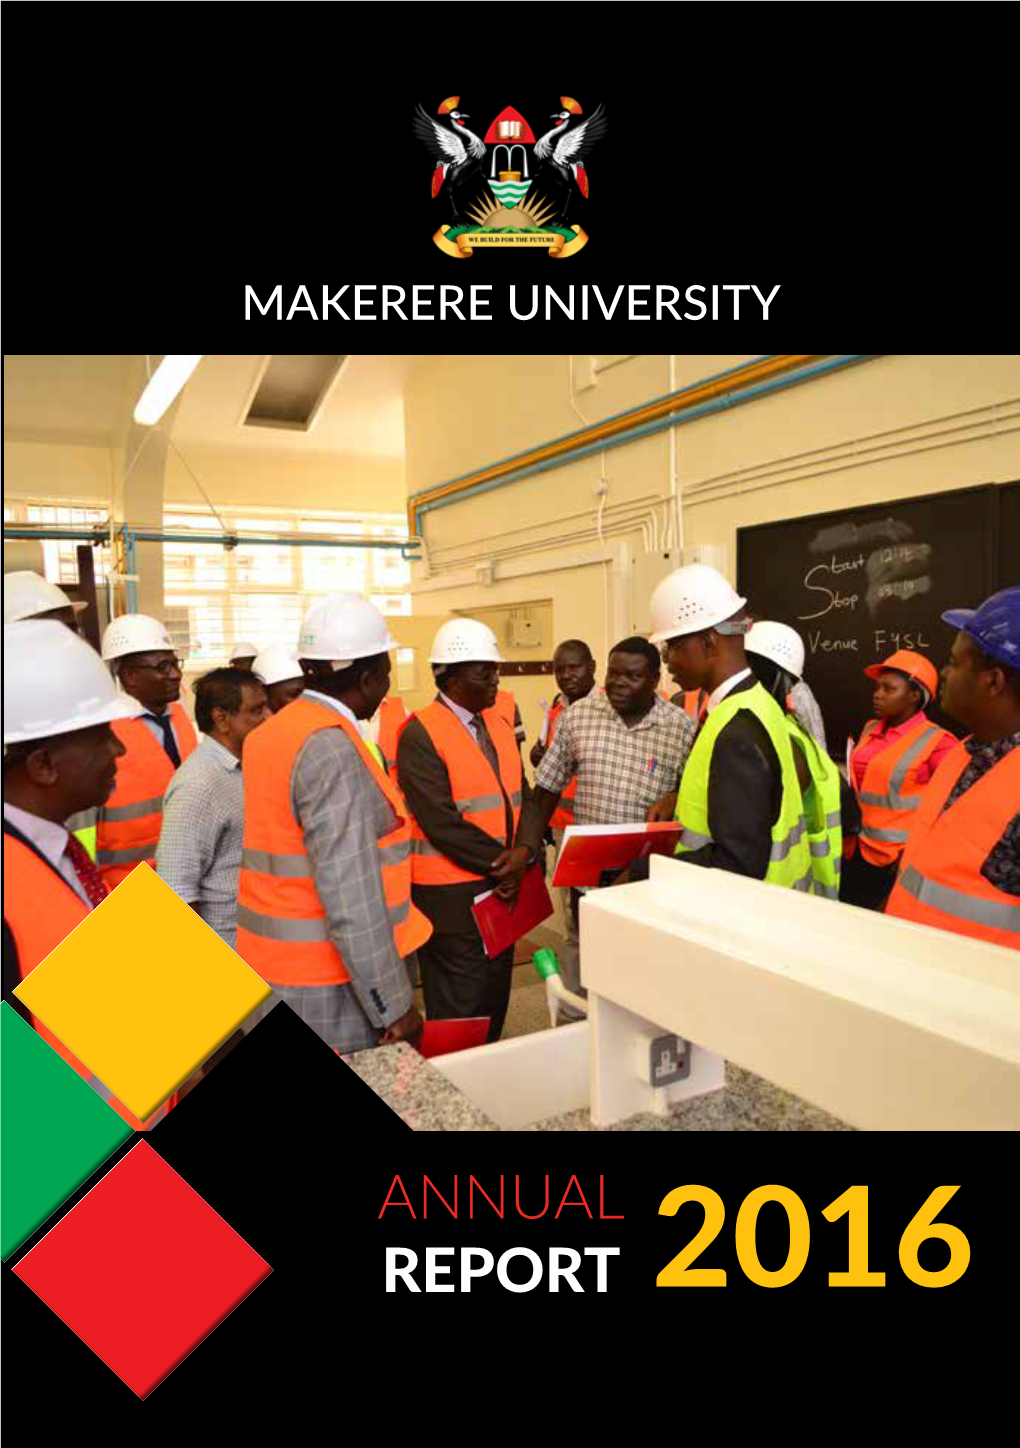 Makerere University Annual Report 2016